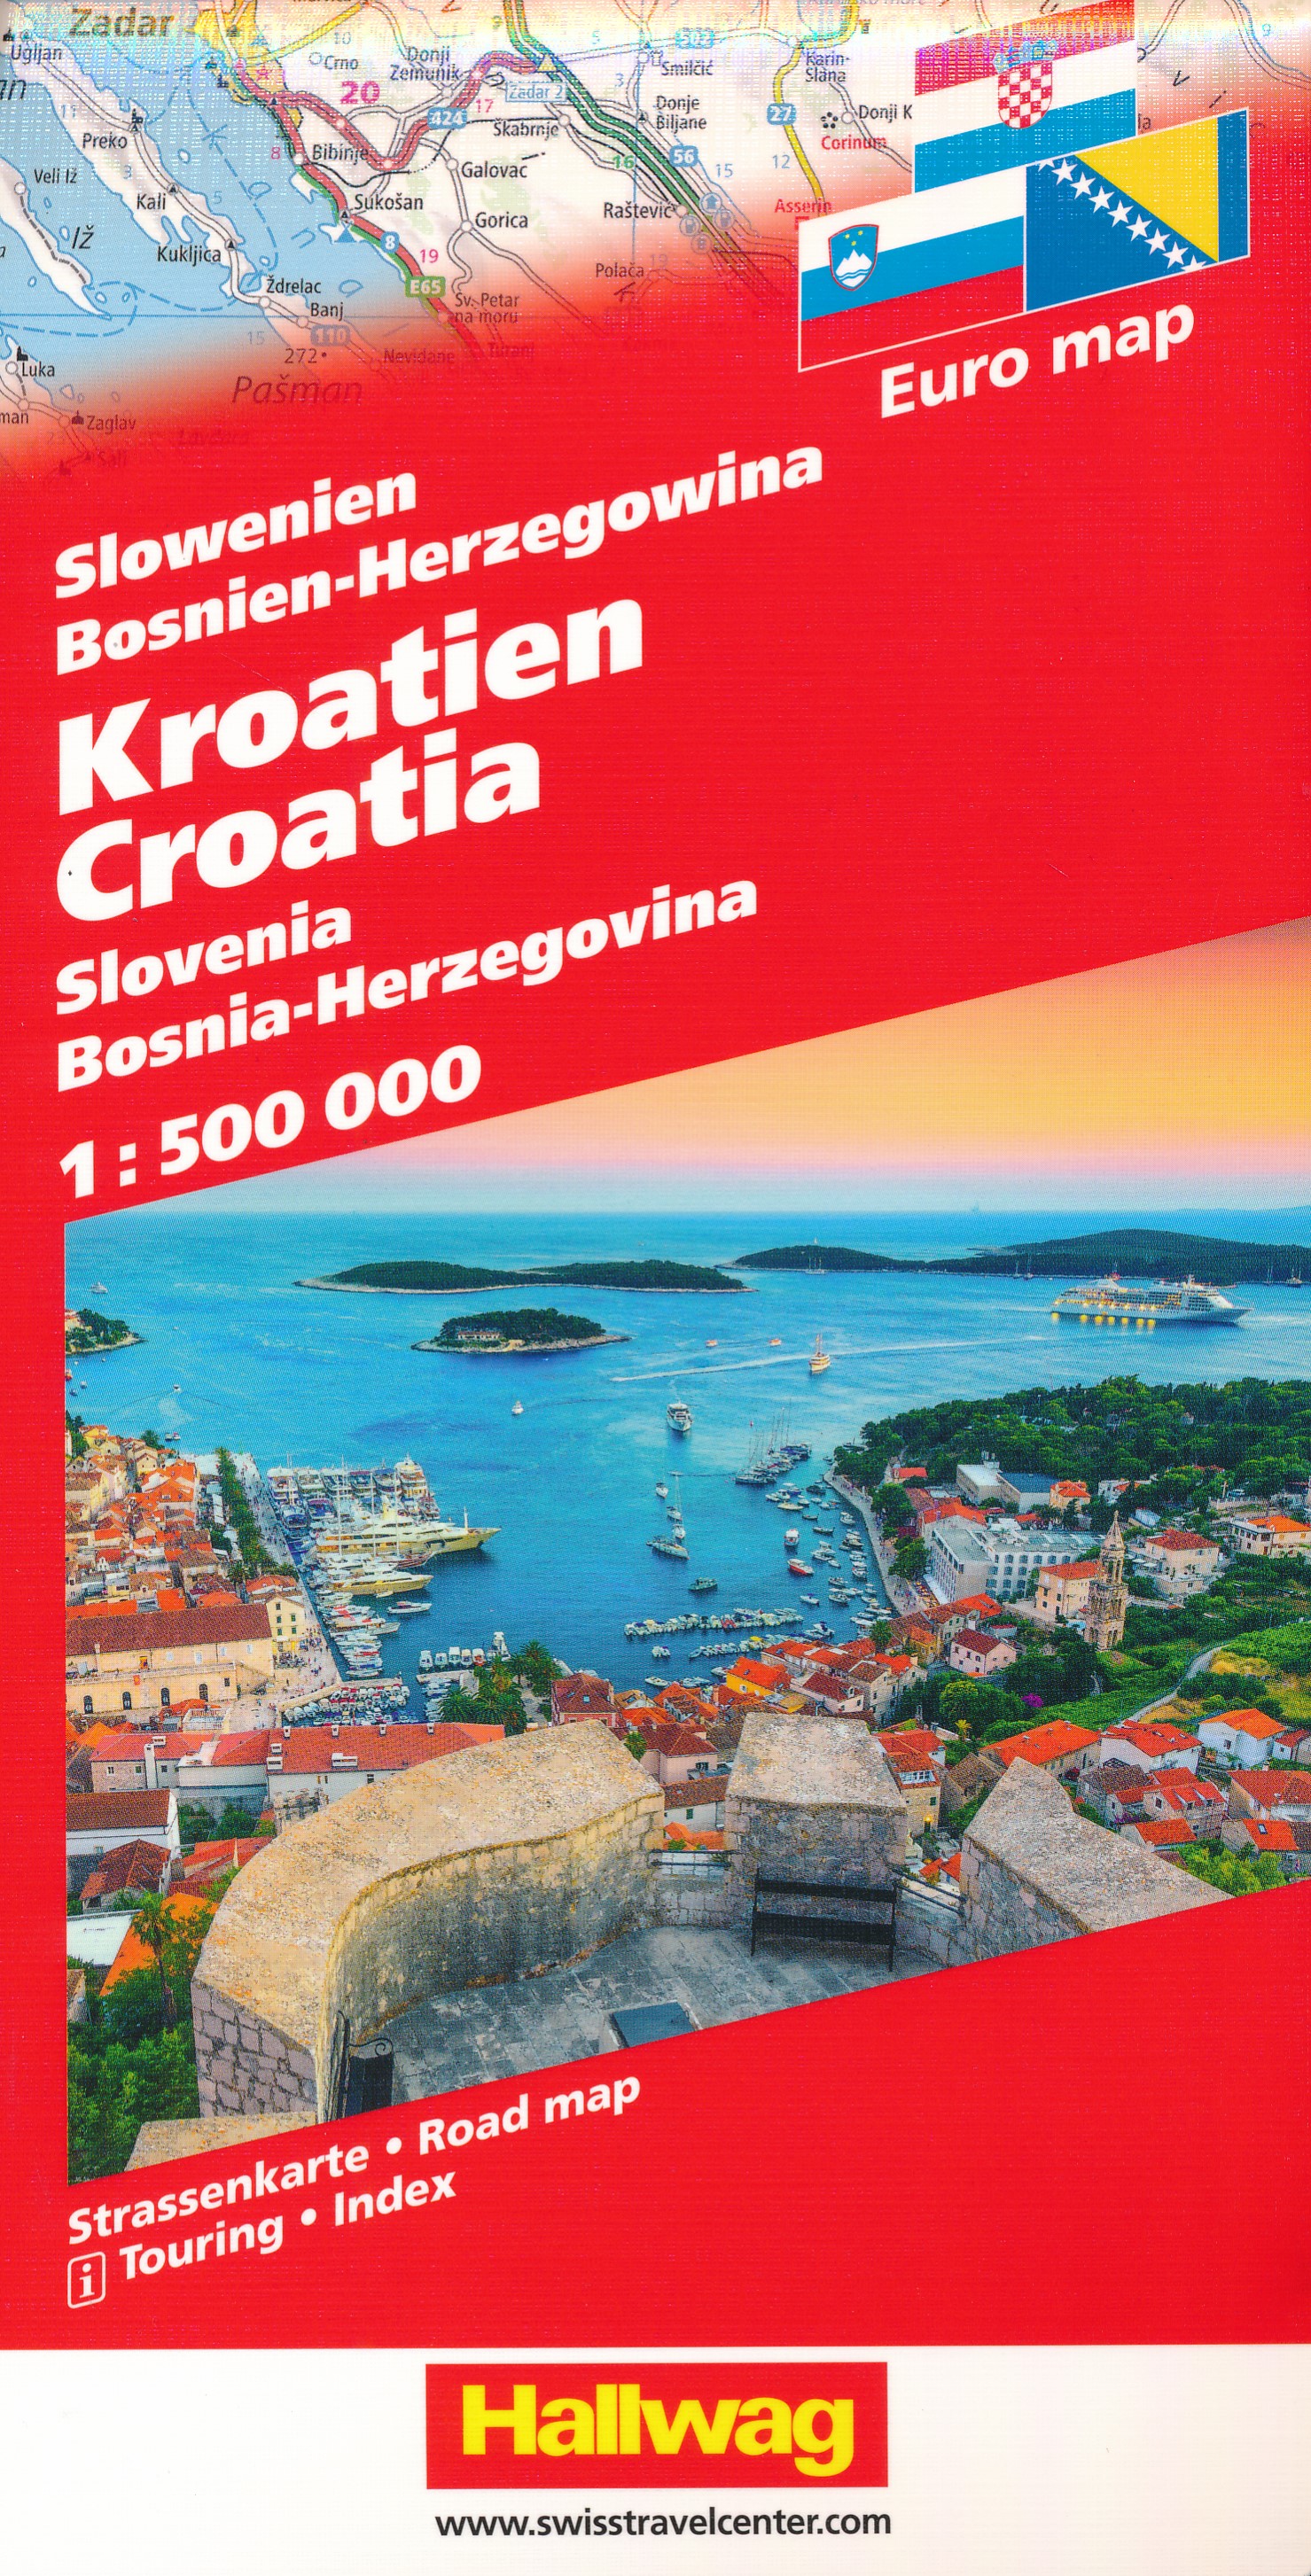 Online bestellen: Wegenkaart - landkaart Kroatië - Slovenië - Bosnië-Herzegovina | Hallwag